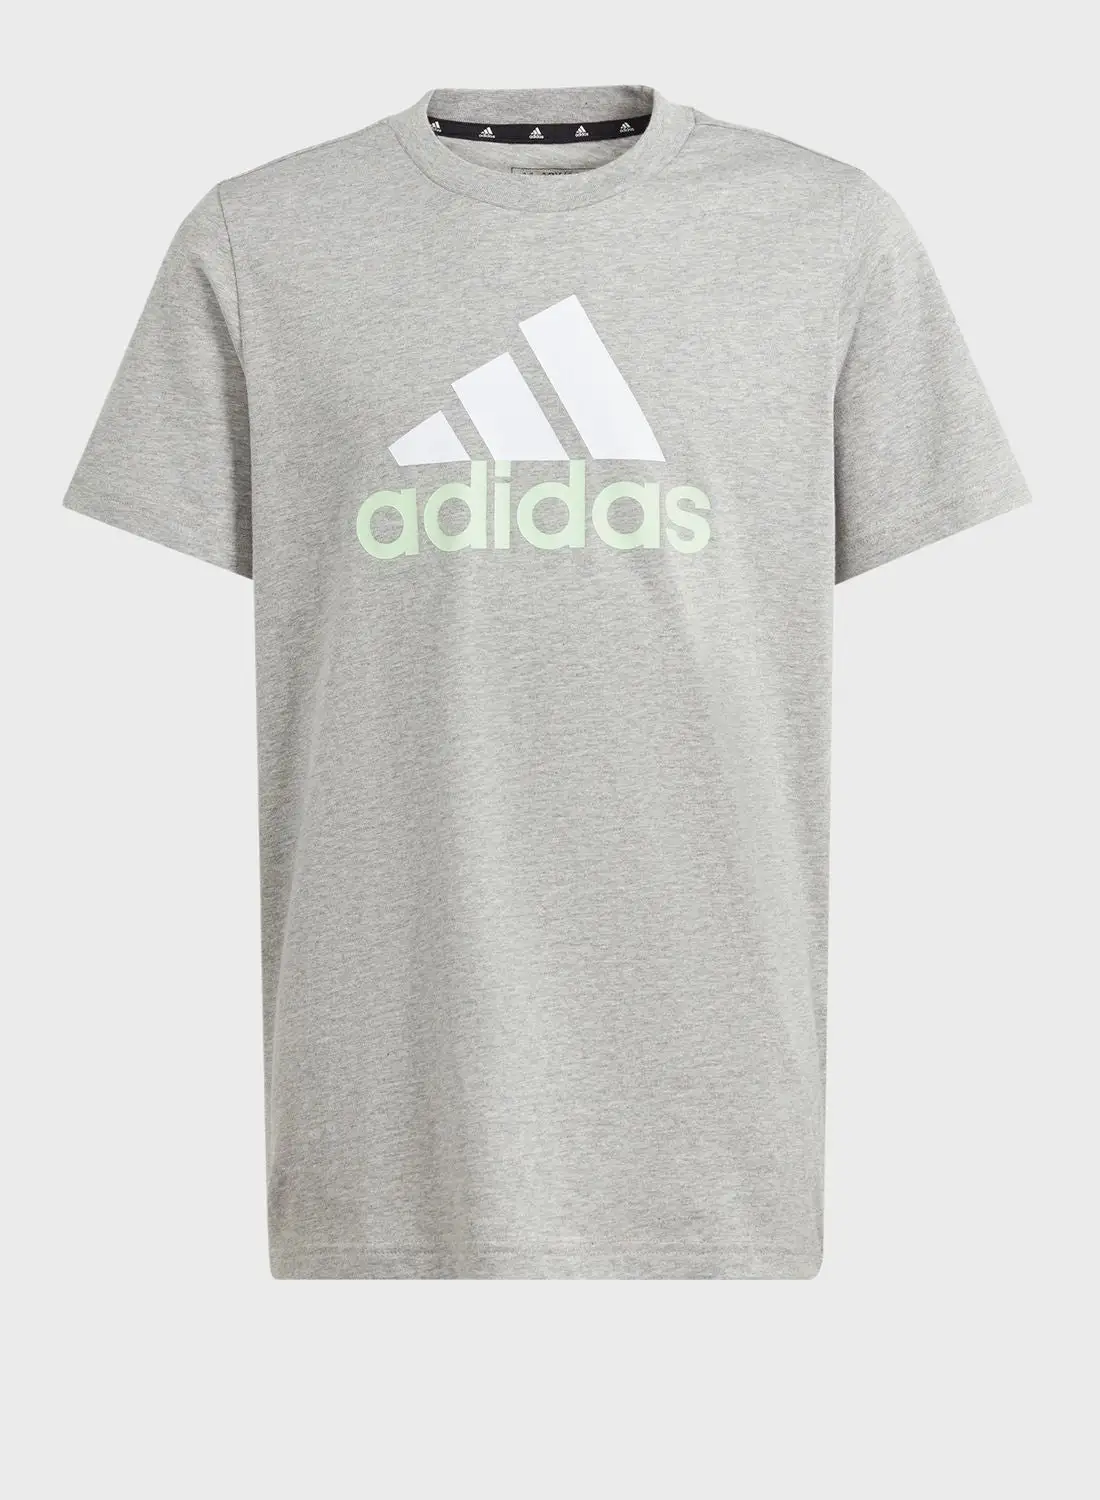 Adidas Lids Big Logo T-Shirt